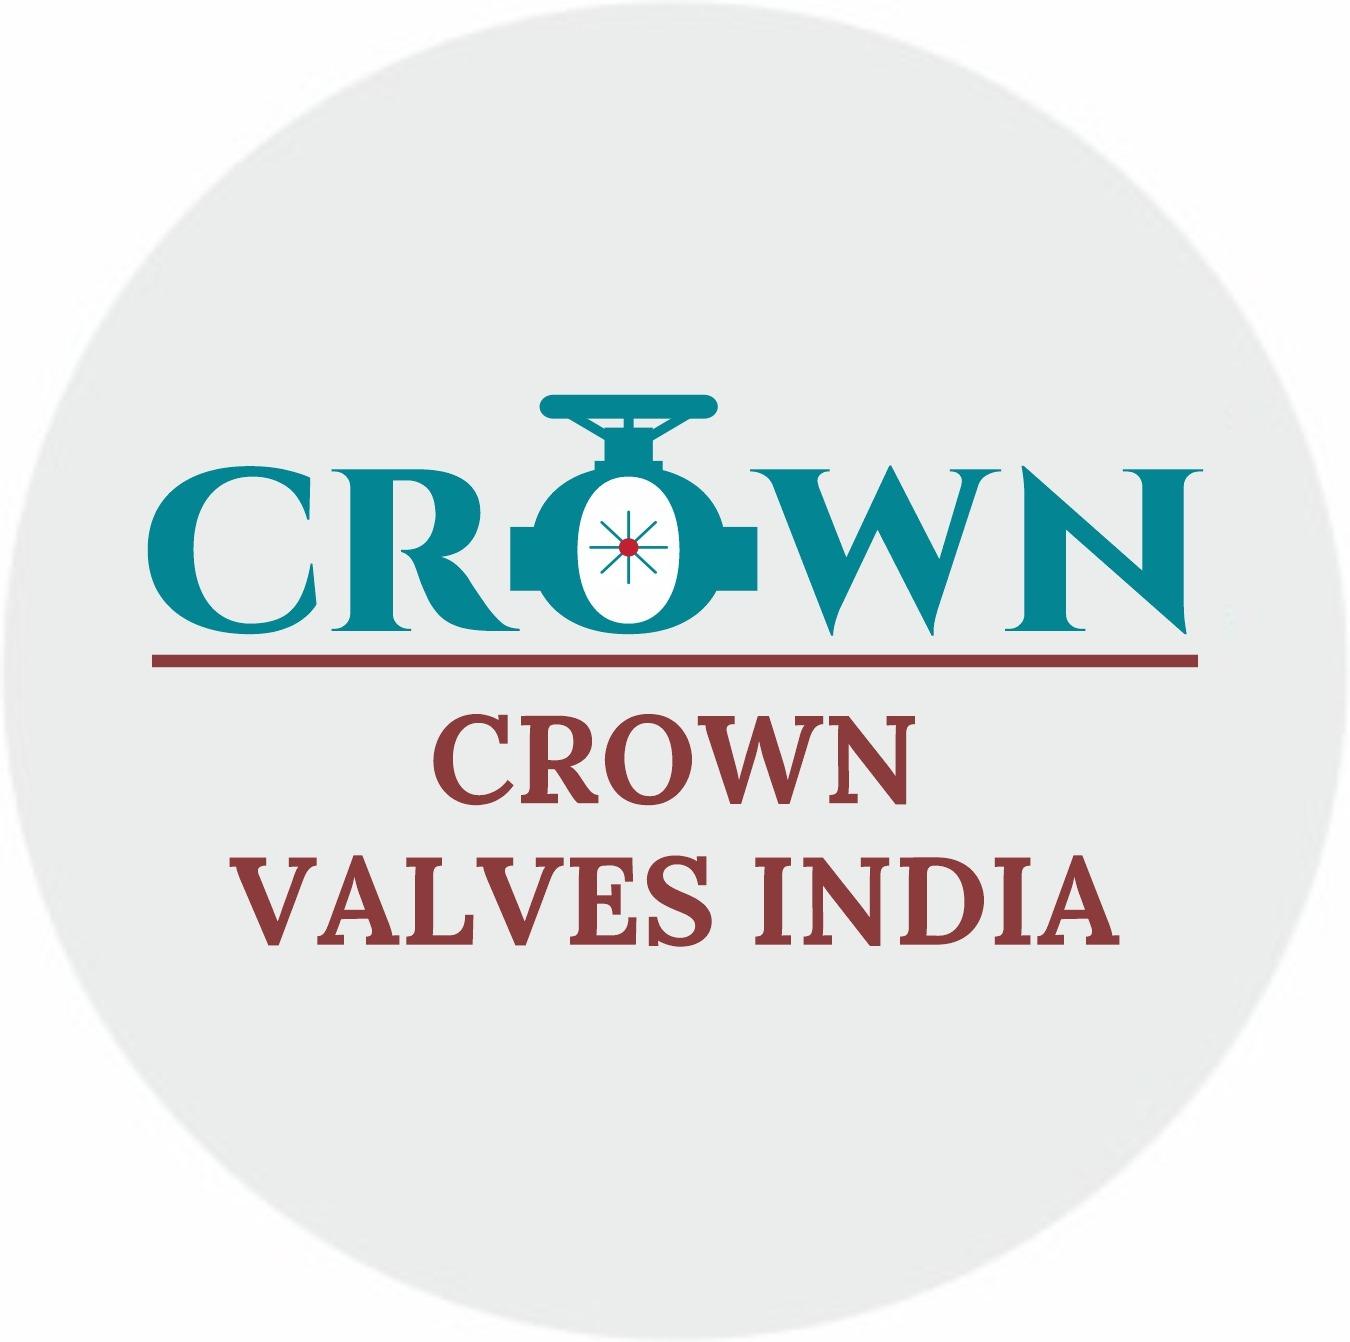 CROWN VALVES INDIA